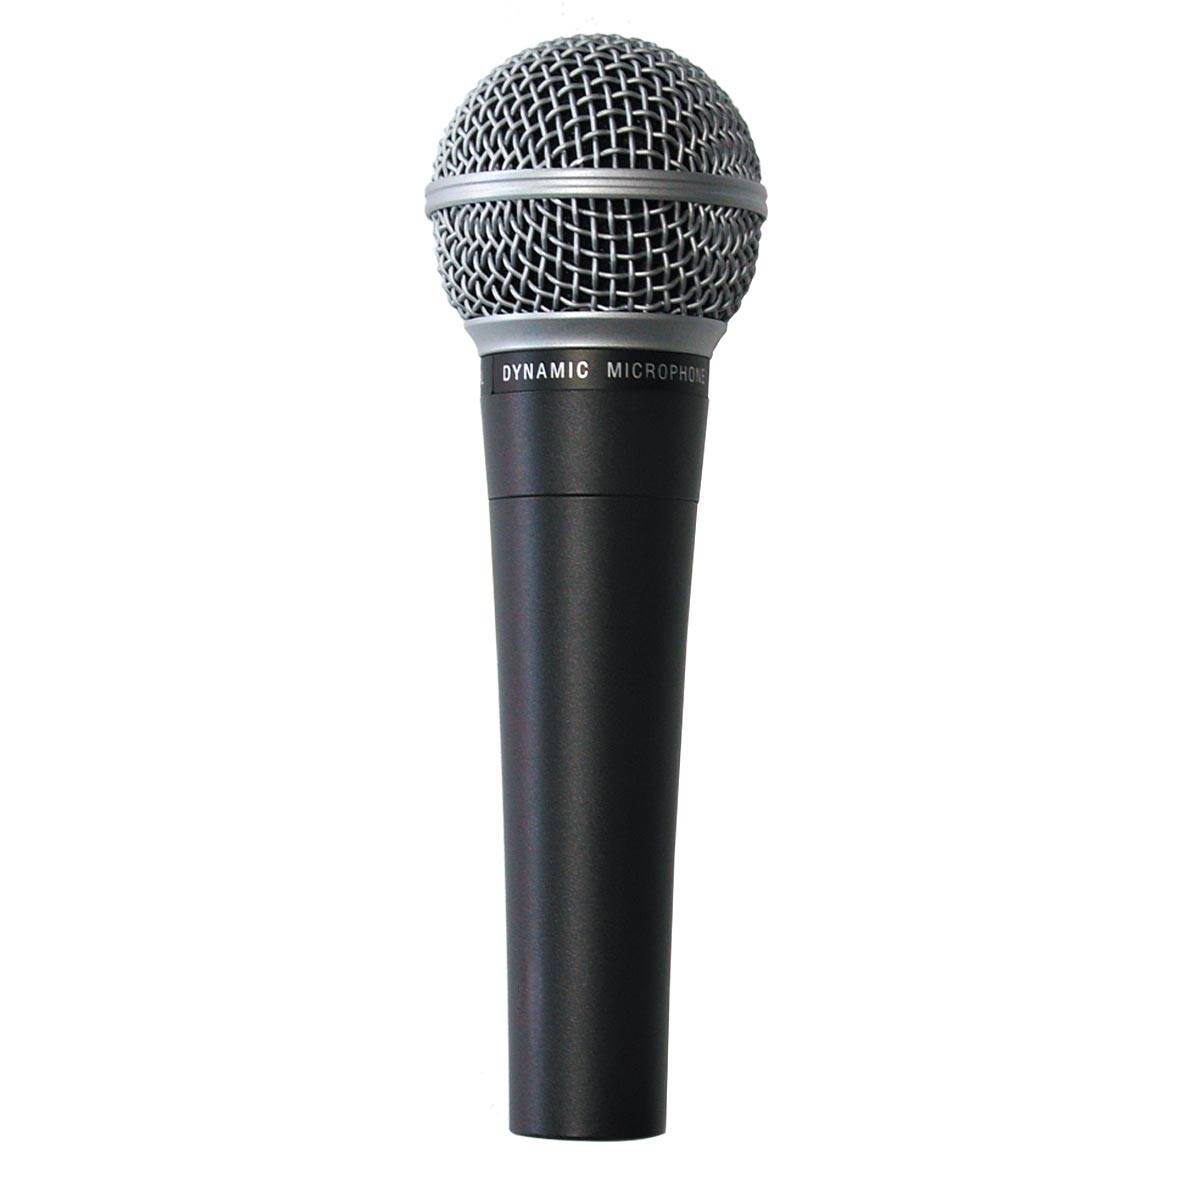 SOUNDSATION DM99 Dynamic Microphone